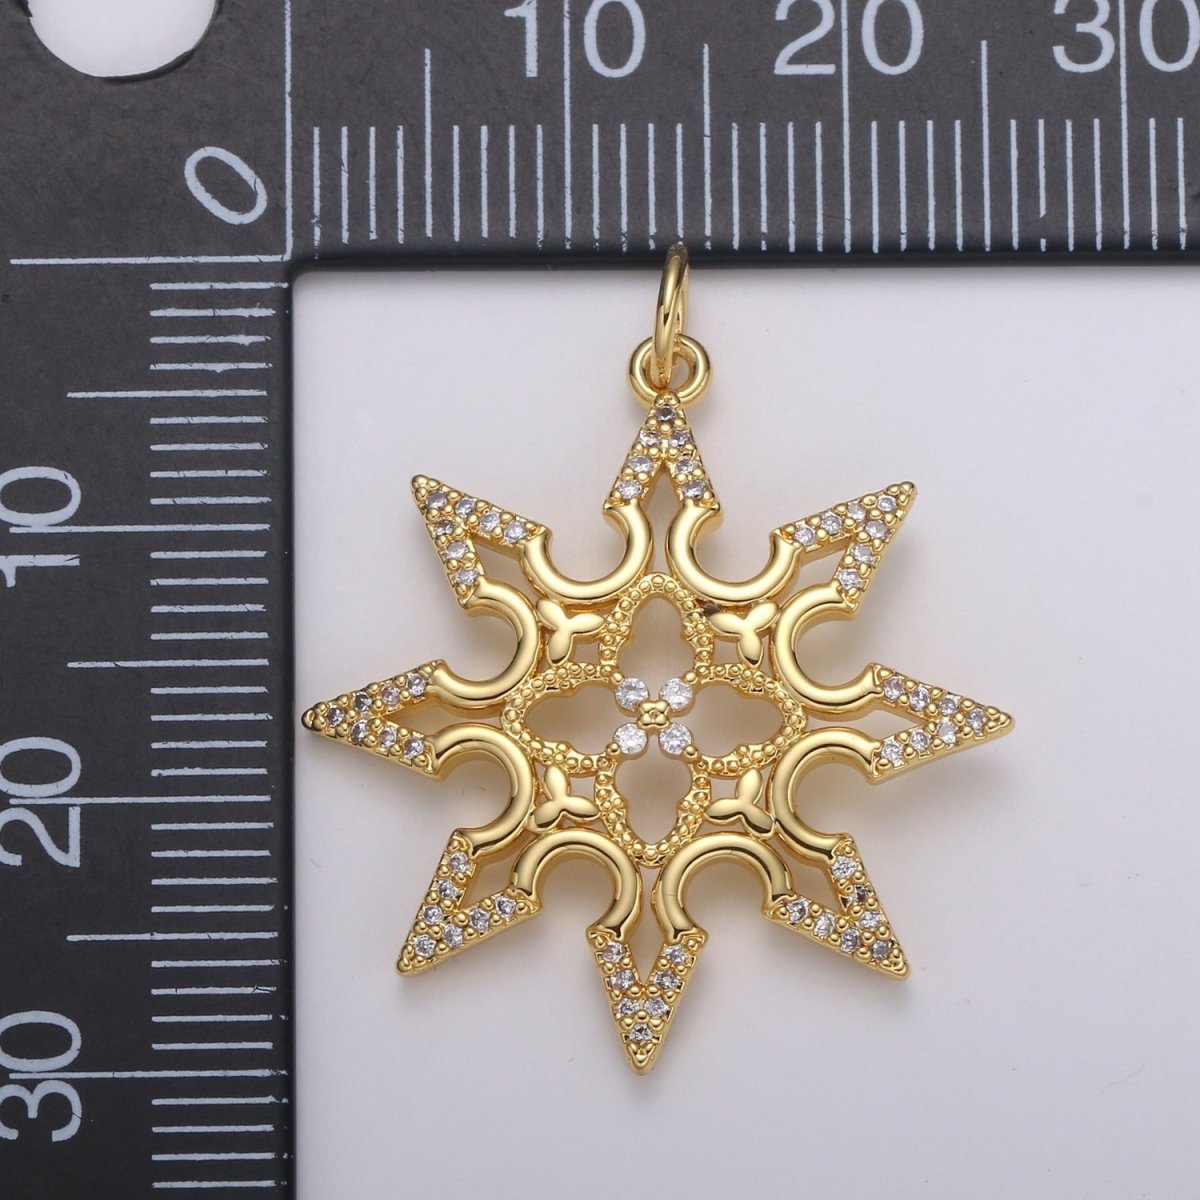 24K Gold Filled Sun CZ Pendant, Micro Pave Cubic Zirconia Star Sun Burst Charm, Celestial Charm 31x25mm E-211 - DLUXCA